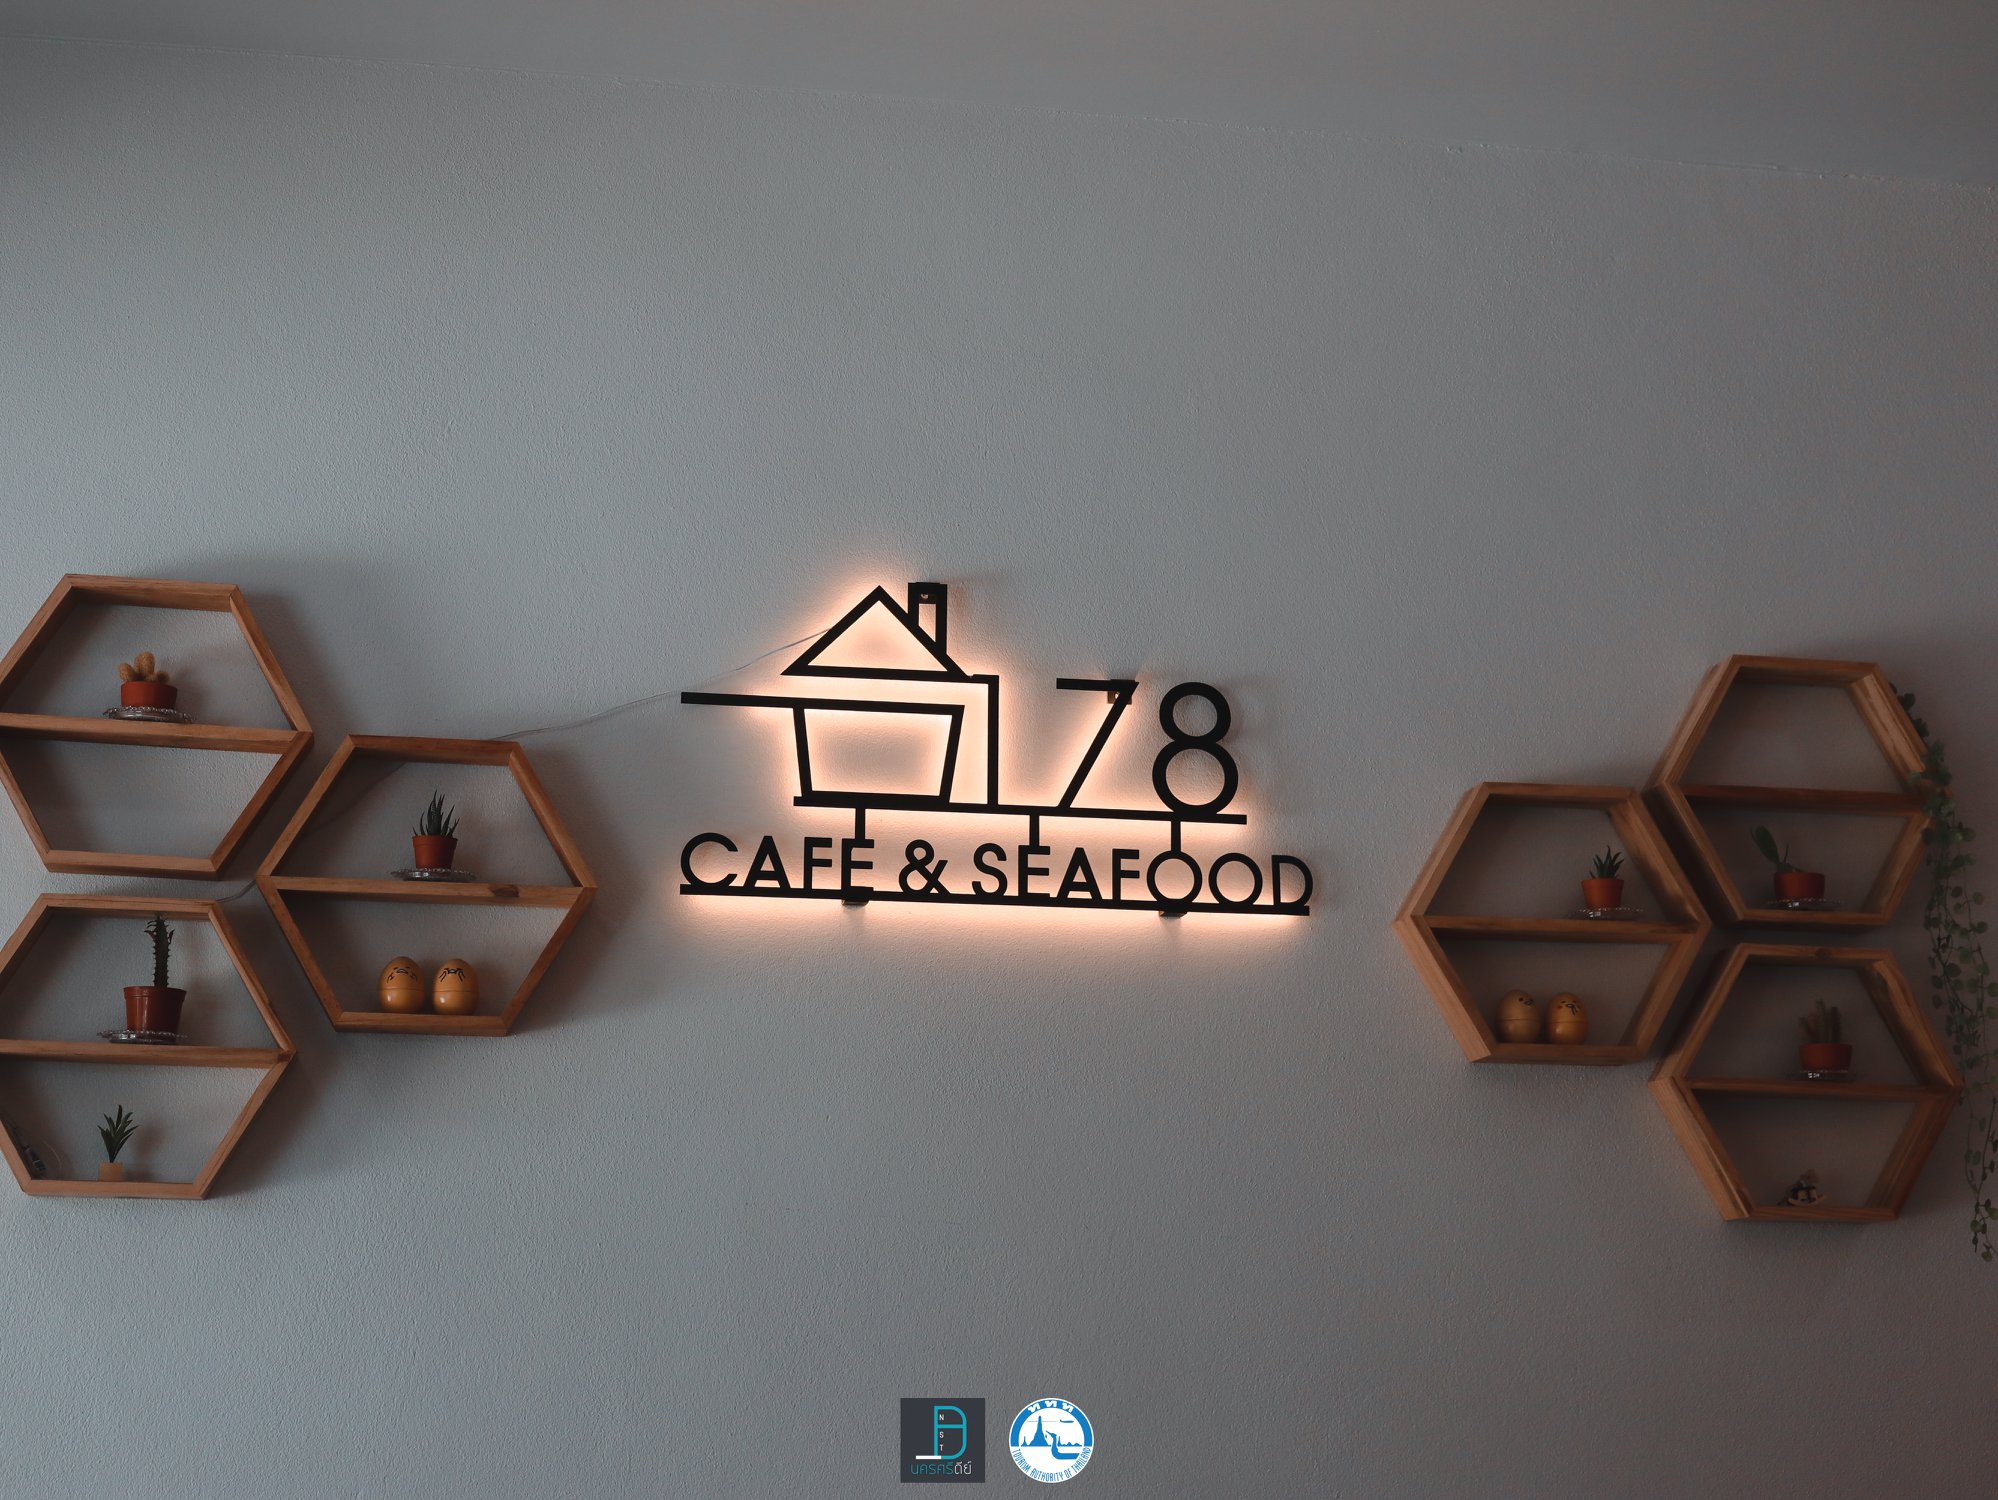 178-Cafe-Seafood-คาเฟ่สตูล จัดไปสำหรับจุดนี้เป็นคาเฟ่-กับร้านอาหารสไตล์ซีฟู๊ด-ขอบอกว่าเด็ดดดด คาเฟ่,สตูล,เด็ด,จุดเช็คอิน,อร่อย,ร้านอาหาร,จุดถ่ายรูป,สถานที่ท่องเที่ยว